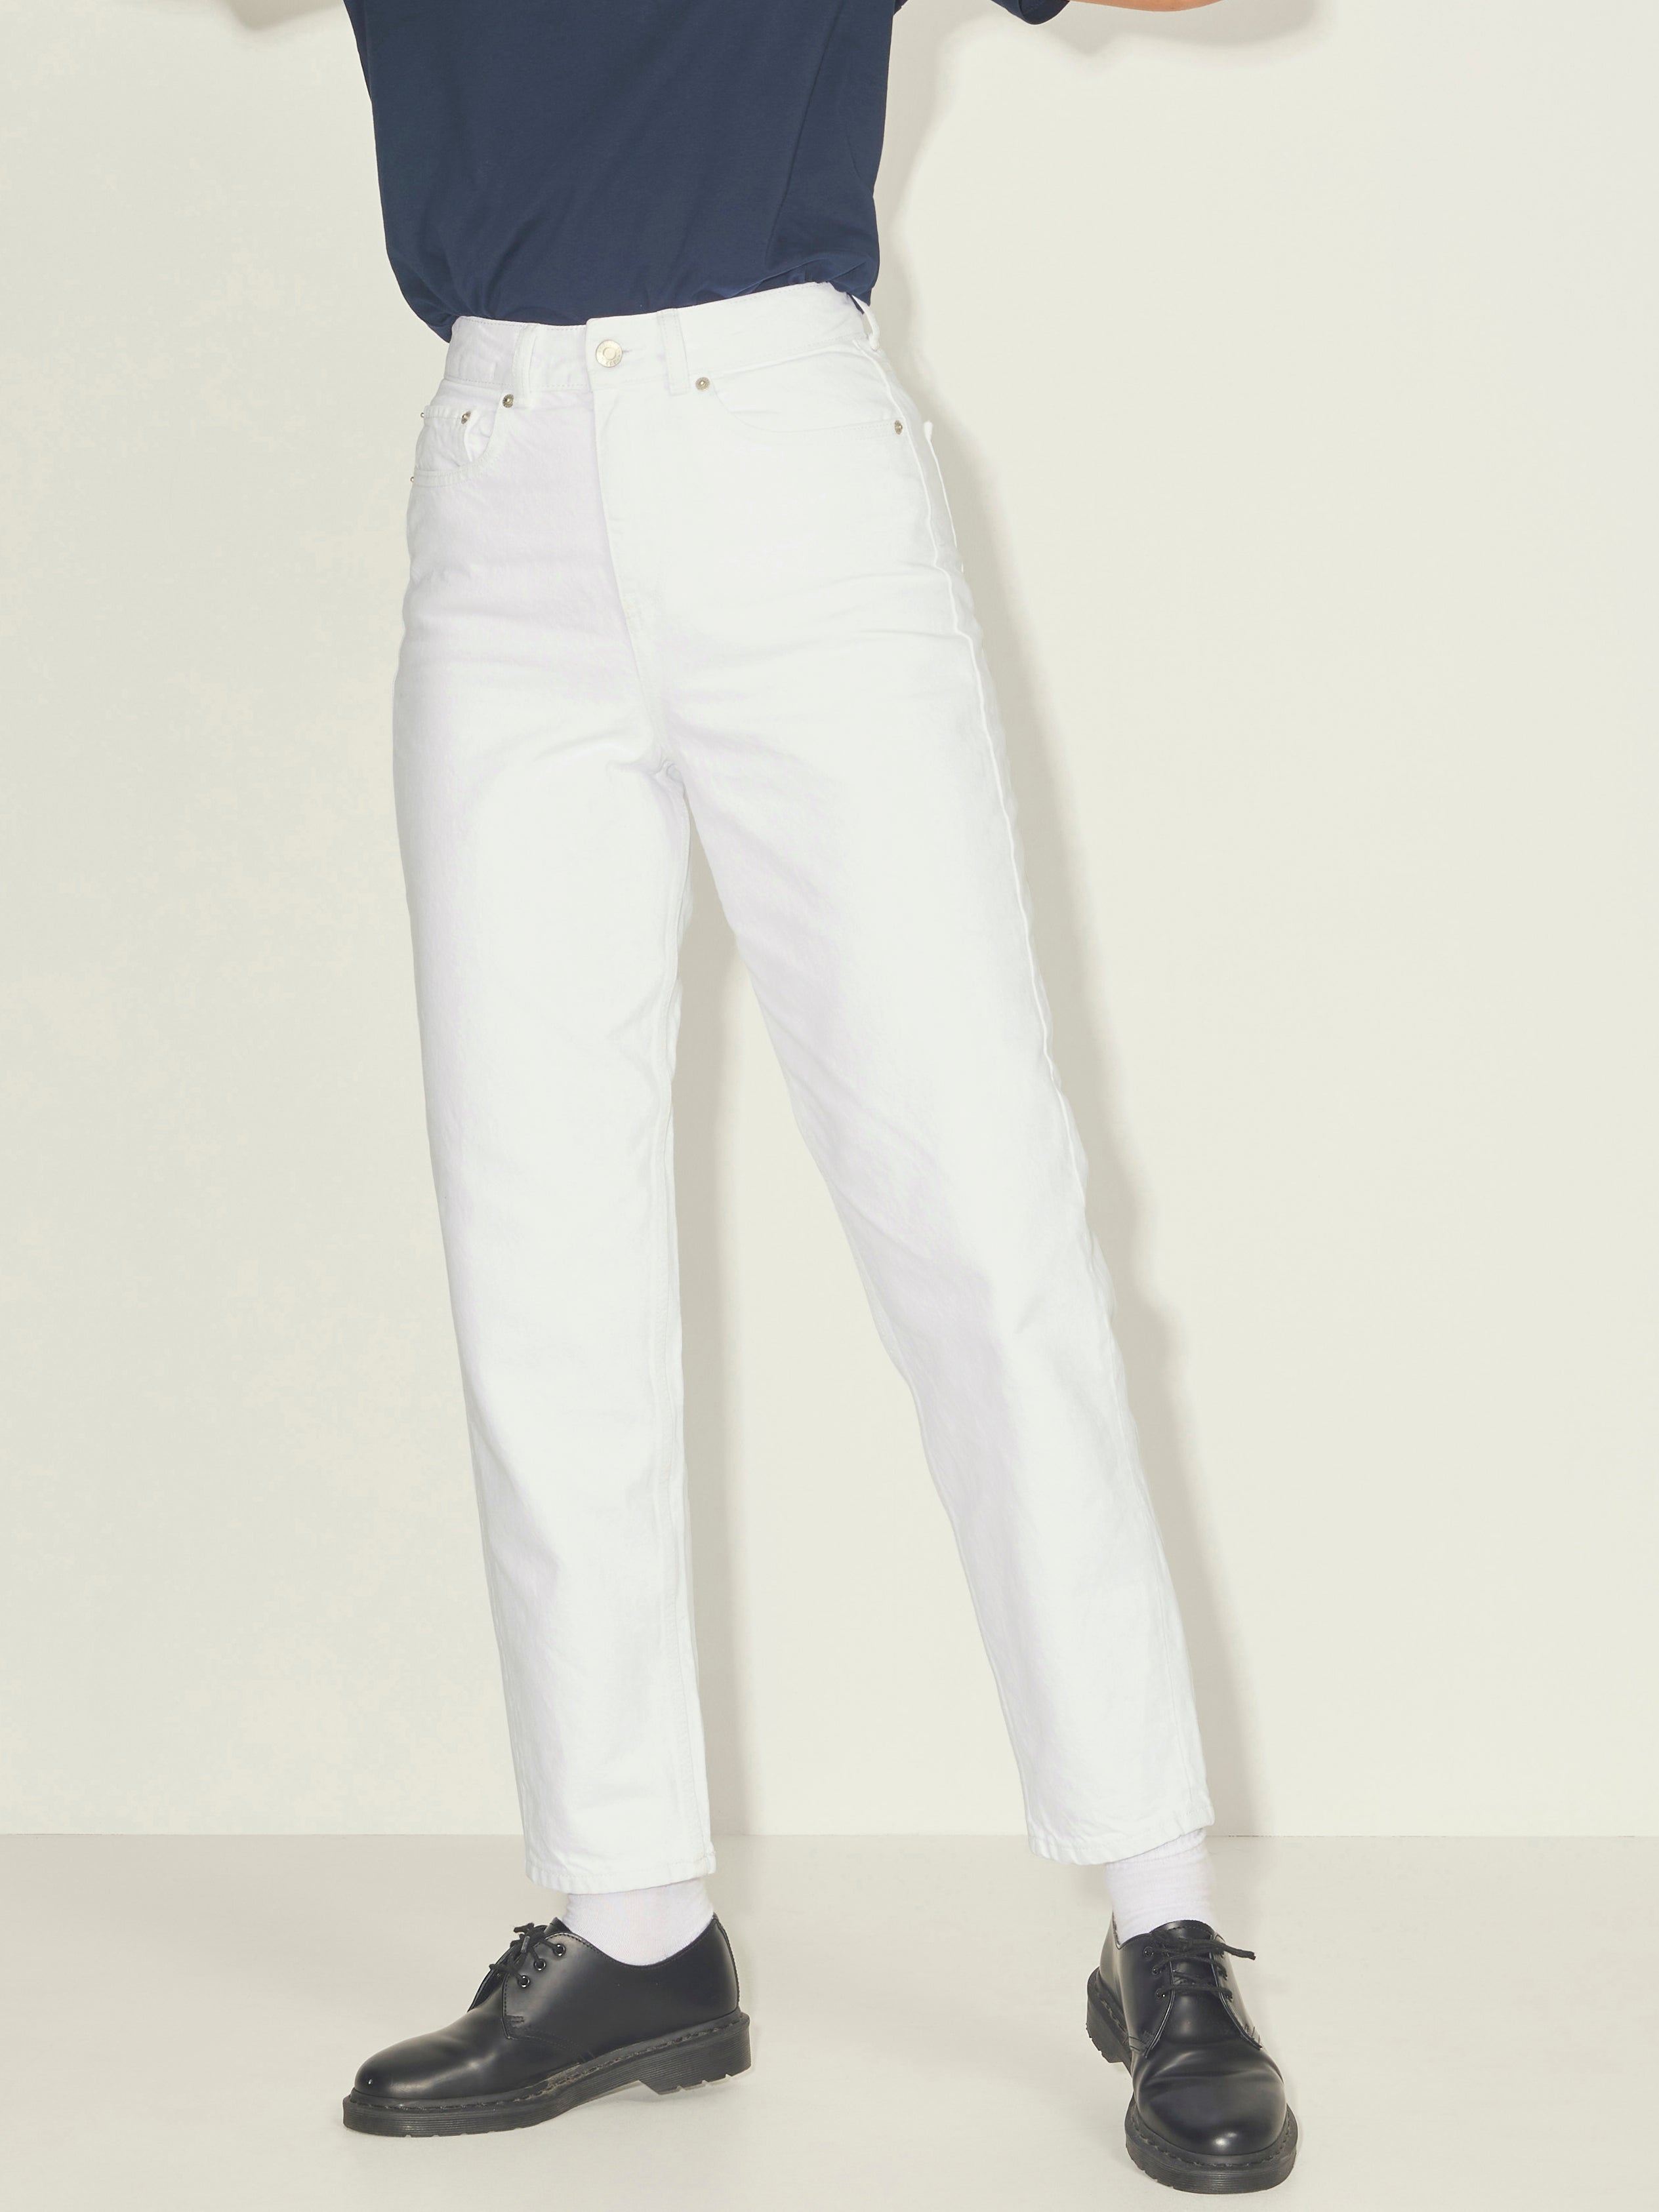 JJXX Jeans: Black, White, Grey & More Colours | JJXX Official